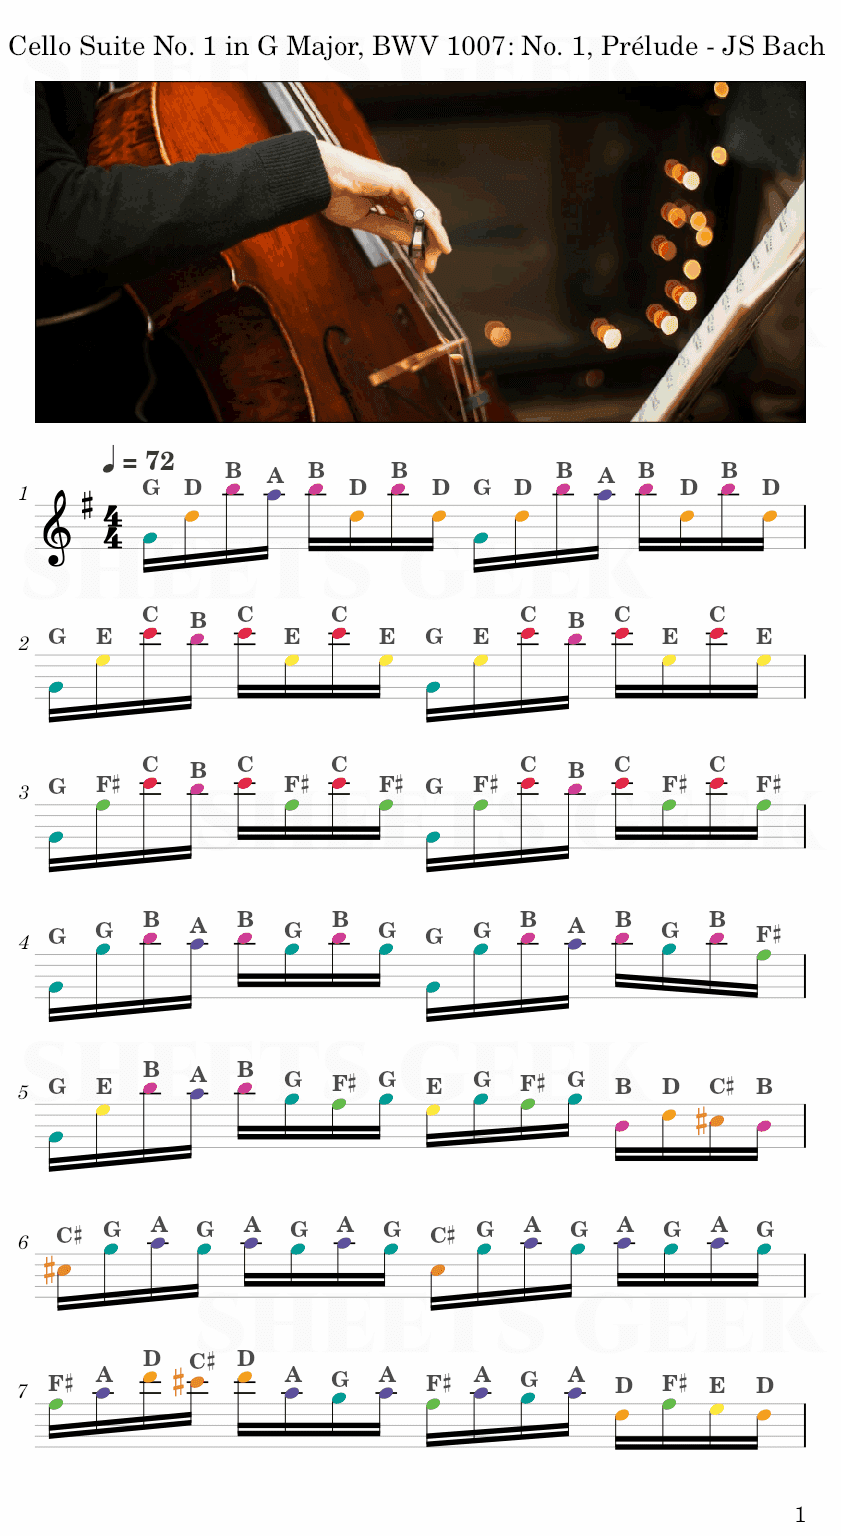 Cello Suite No. 1 in G Major, BWV 1007: No. 1, Prélude - JS Bach Easy Sheets Music Free for piano, keyboard, flute, violin, sax, celllo 1